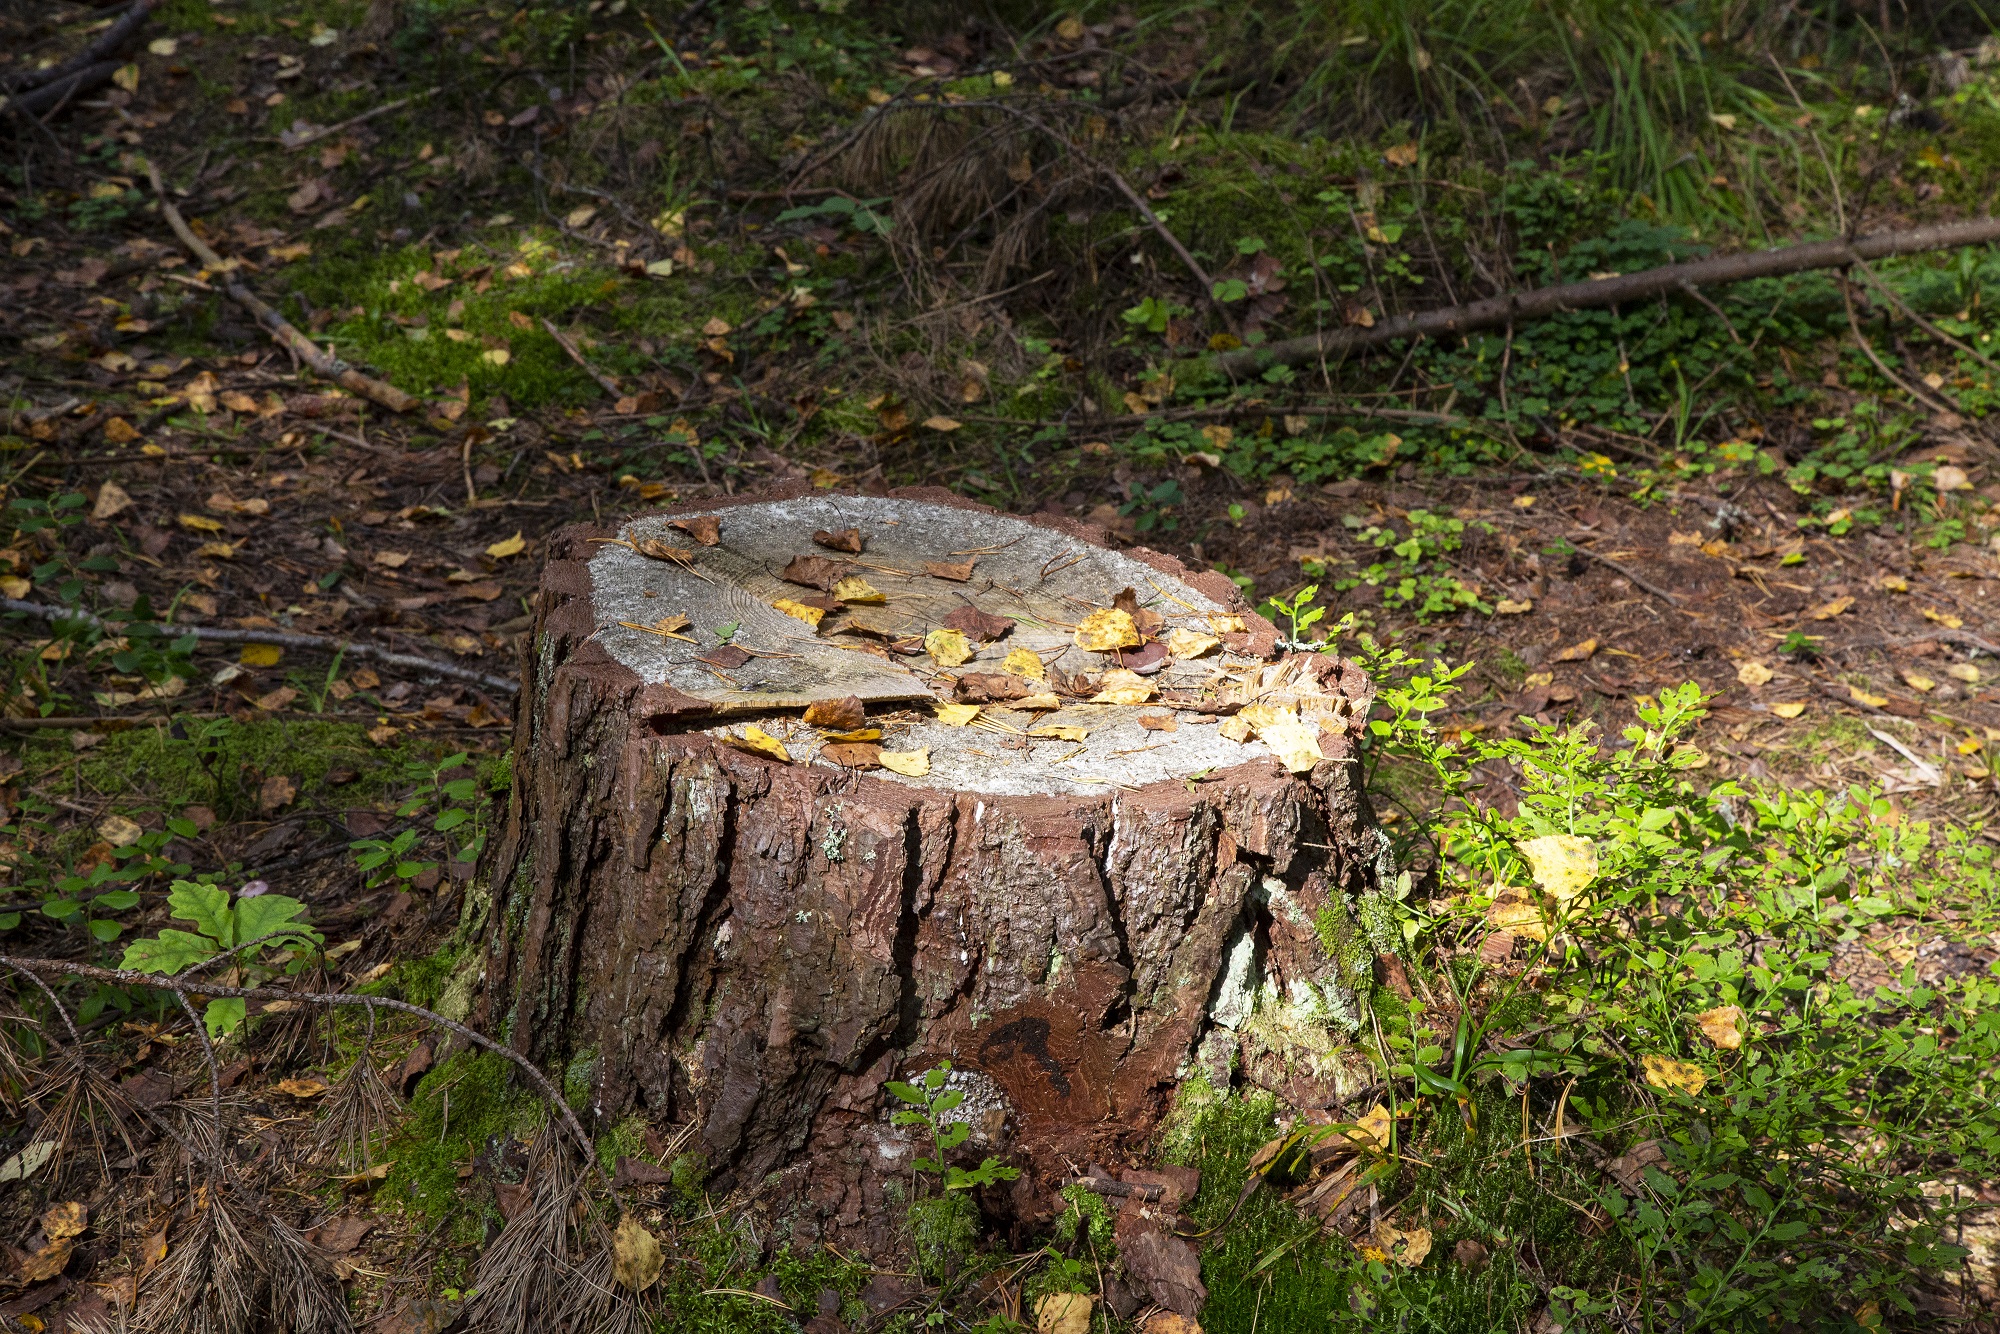 A close up photo of a tree stump